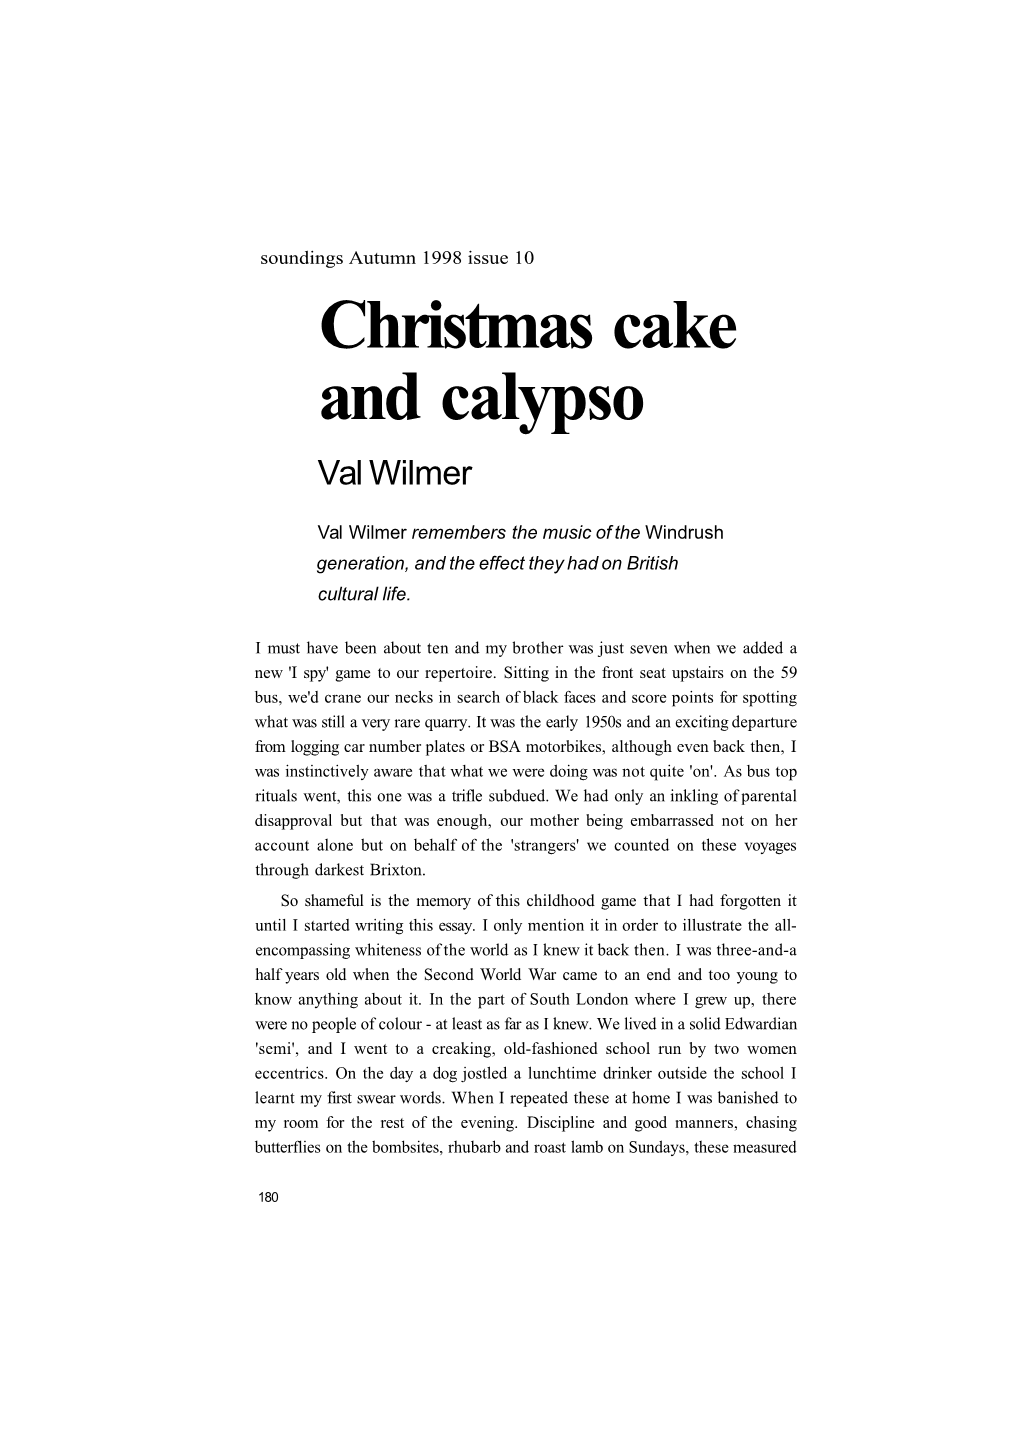 Christmas Cake and Calypso Val Wilmer